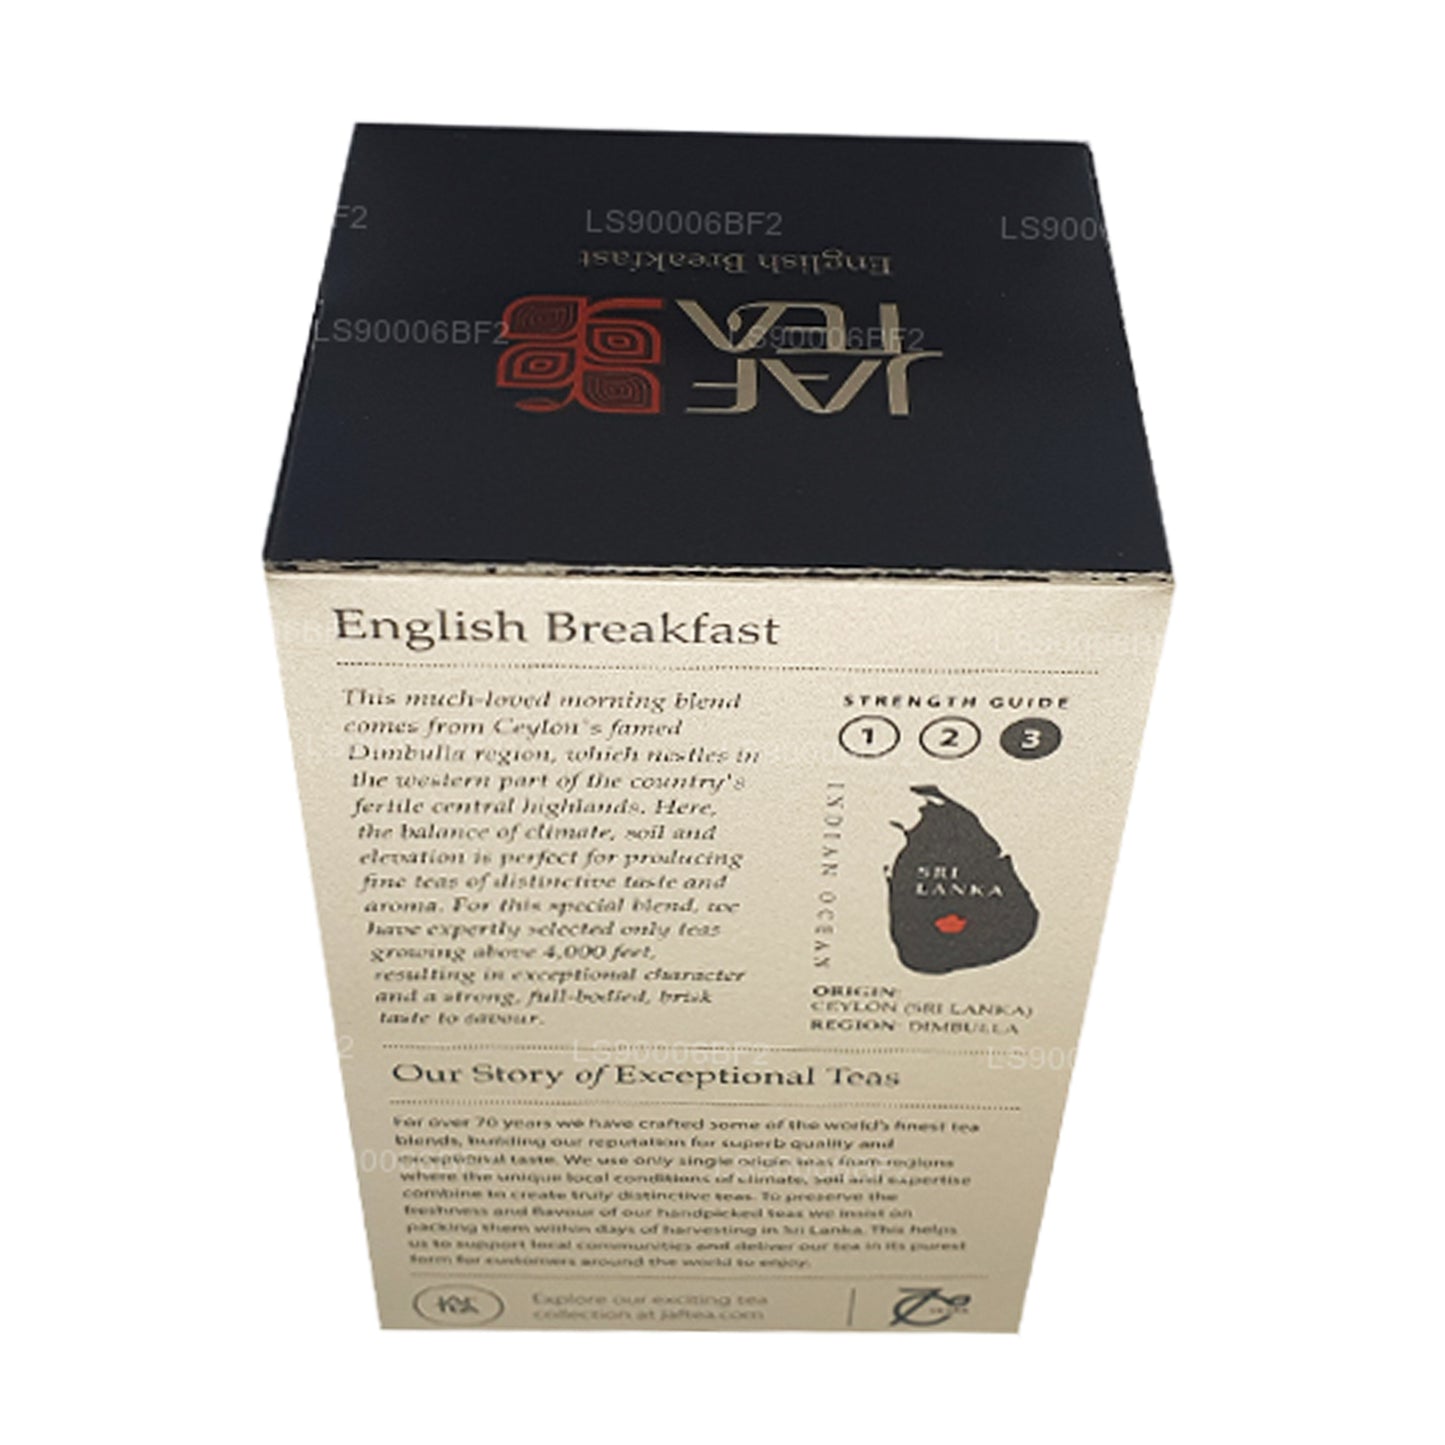 Jaf Tea English Breakfast (40g) 20 sachets de thé